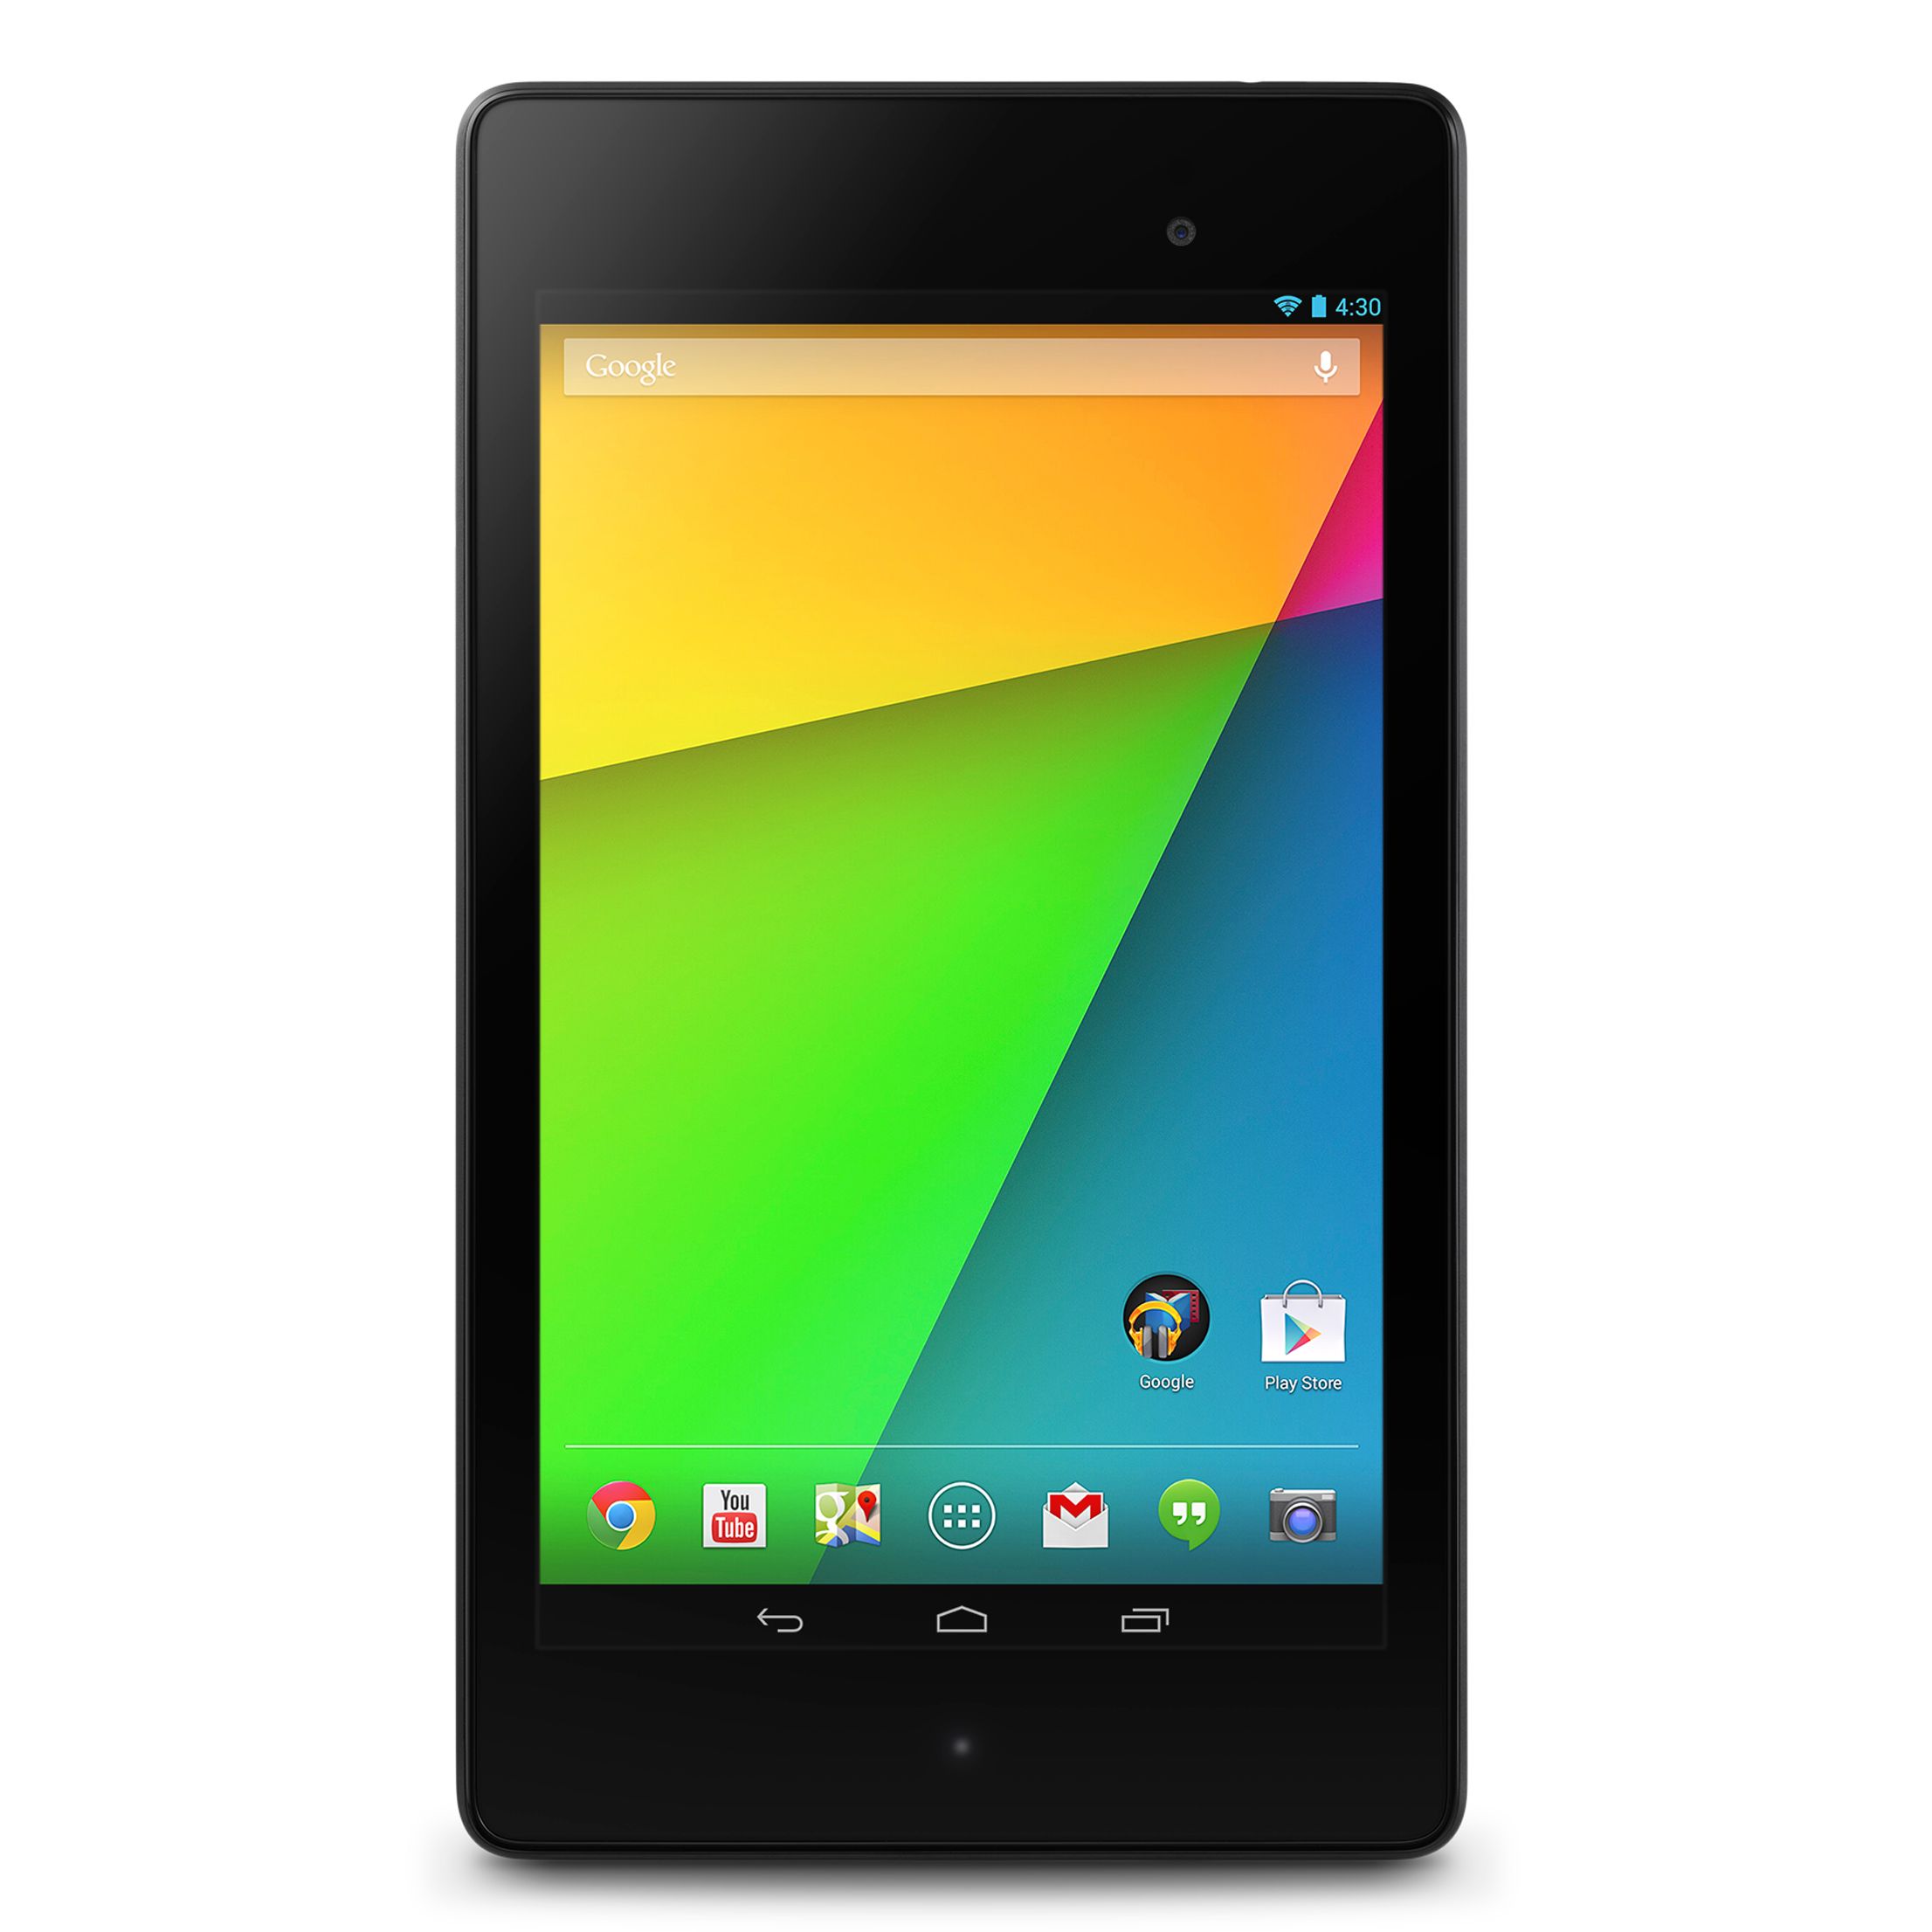 Google Nexus 7 (2013) Tablet, Qualcomm Snapdragon S4, Android, 7", NFC, Wi-Fi, 16GB, Black